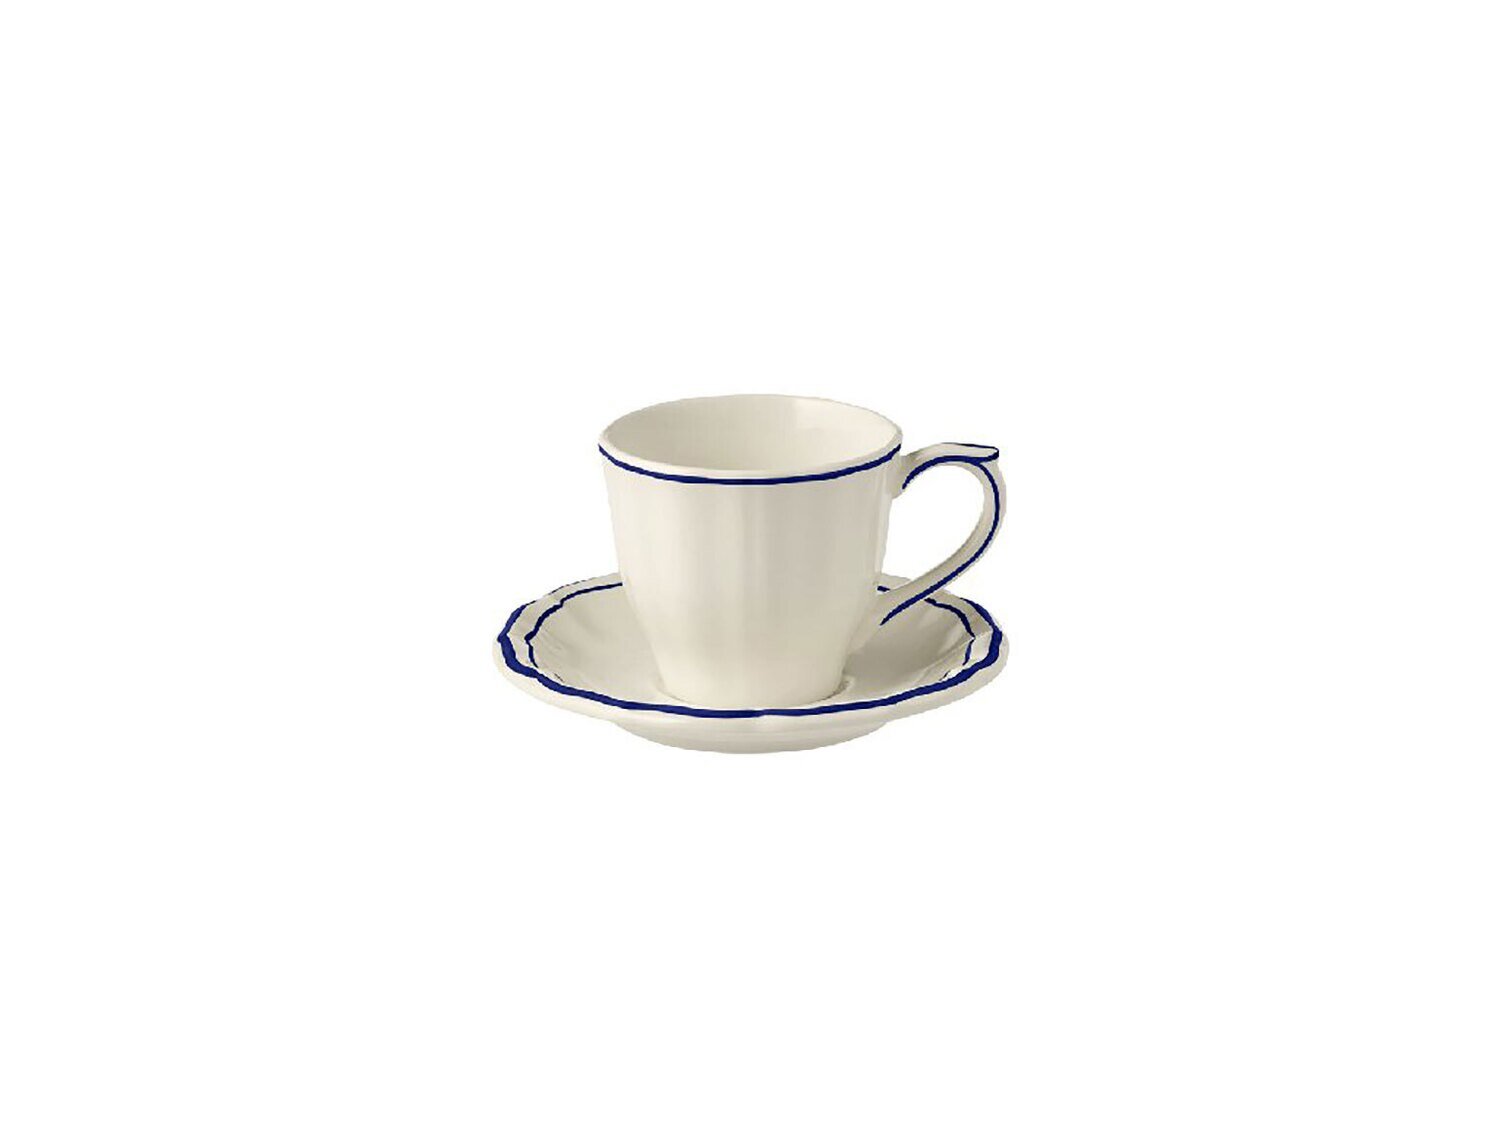 Gien Filet Cobalt Us Tea Cups & Saucers Set of 2 15412PTU49